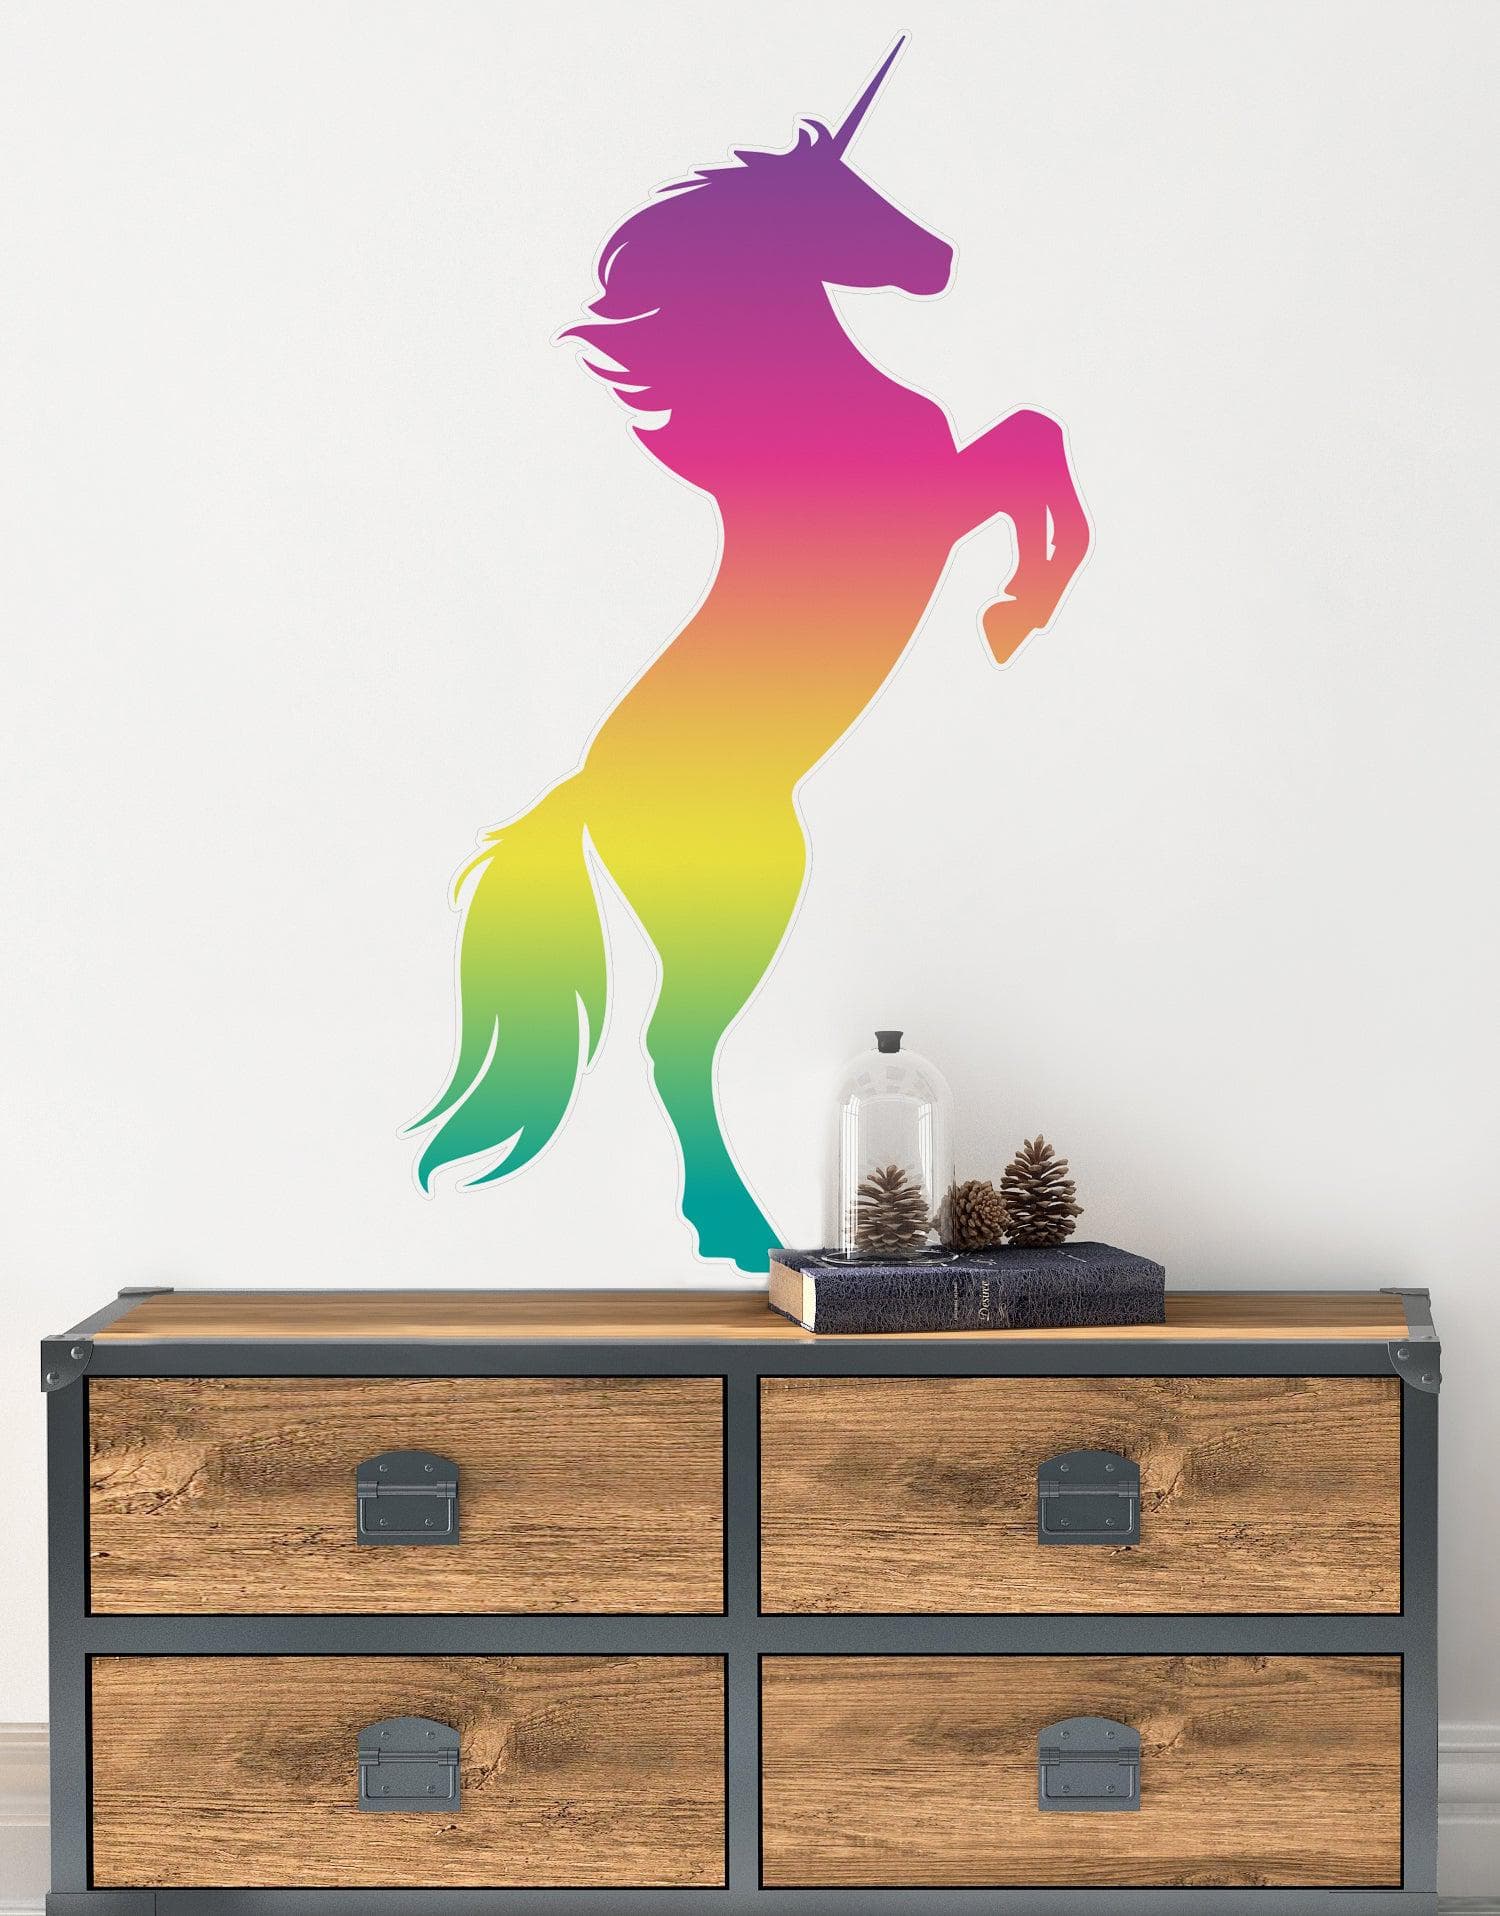 Rainbow Unicorn Wall Decal Set